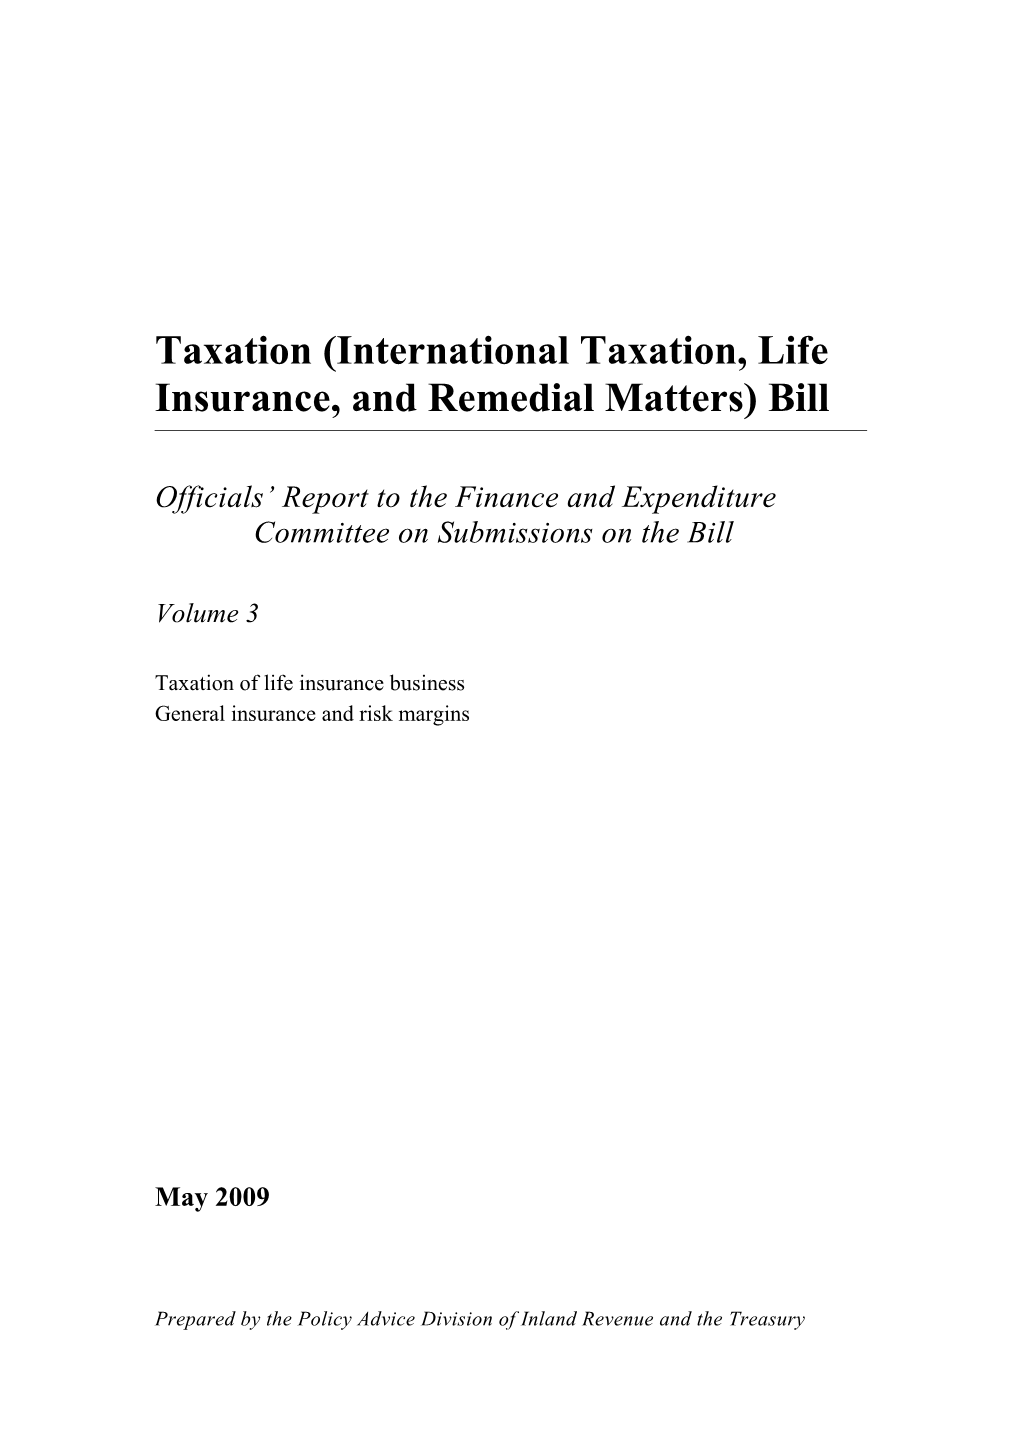 Taxation (International Taxation, Life Insurance, and Remedial Matters) Bill - Officials'